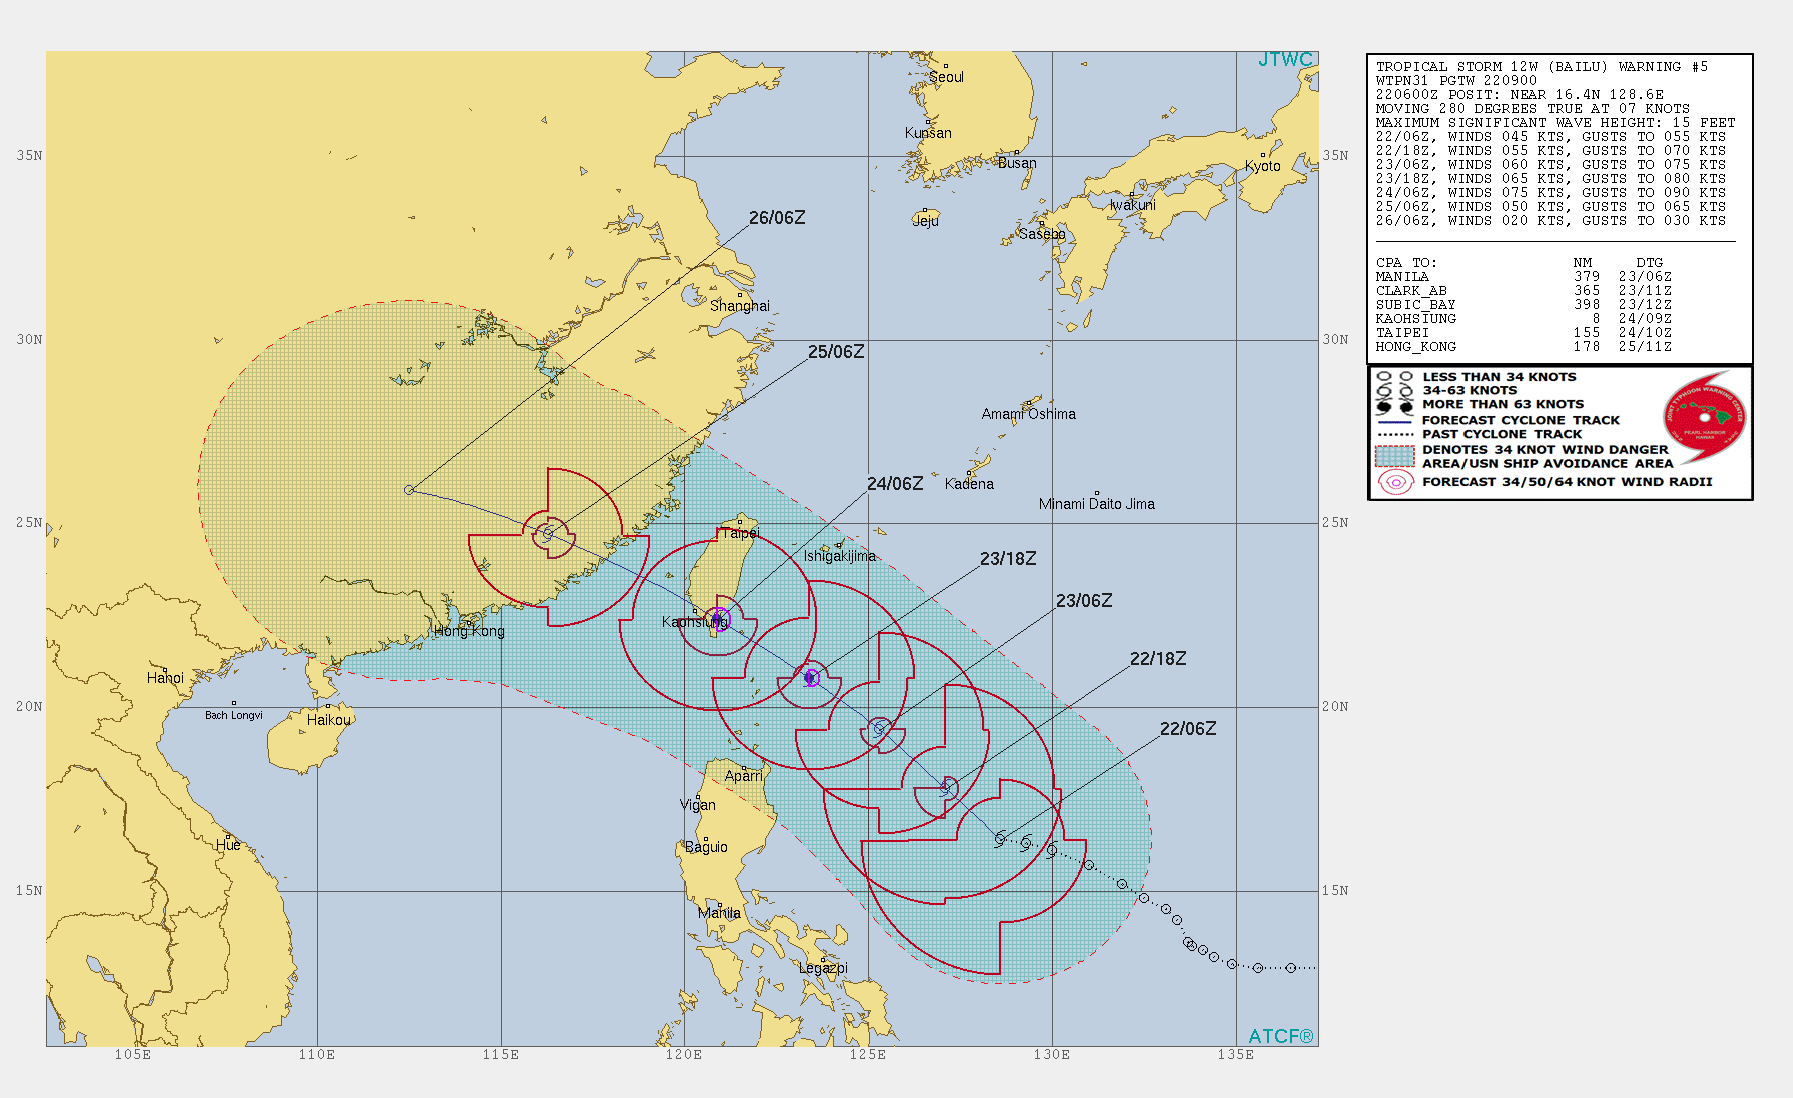 TS Bailu(12W) gradually intensifying to Typhoon intensity within 36h